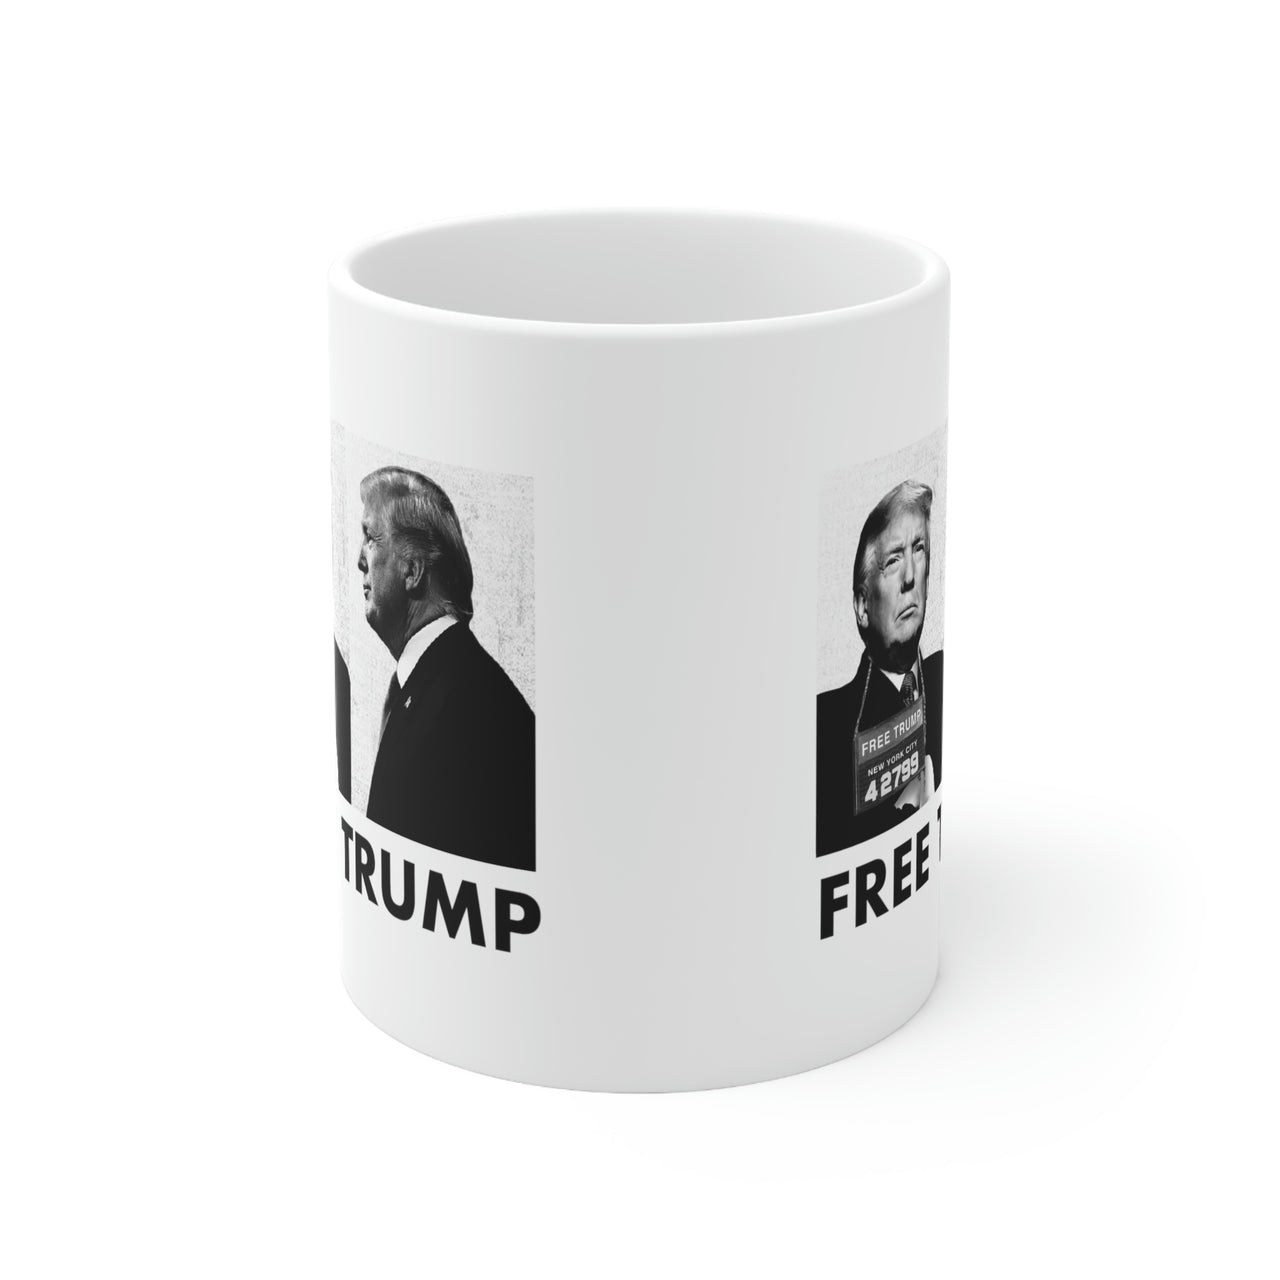 Free Trump Mug